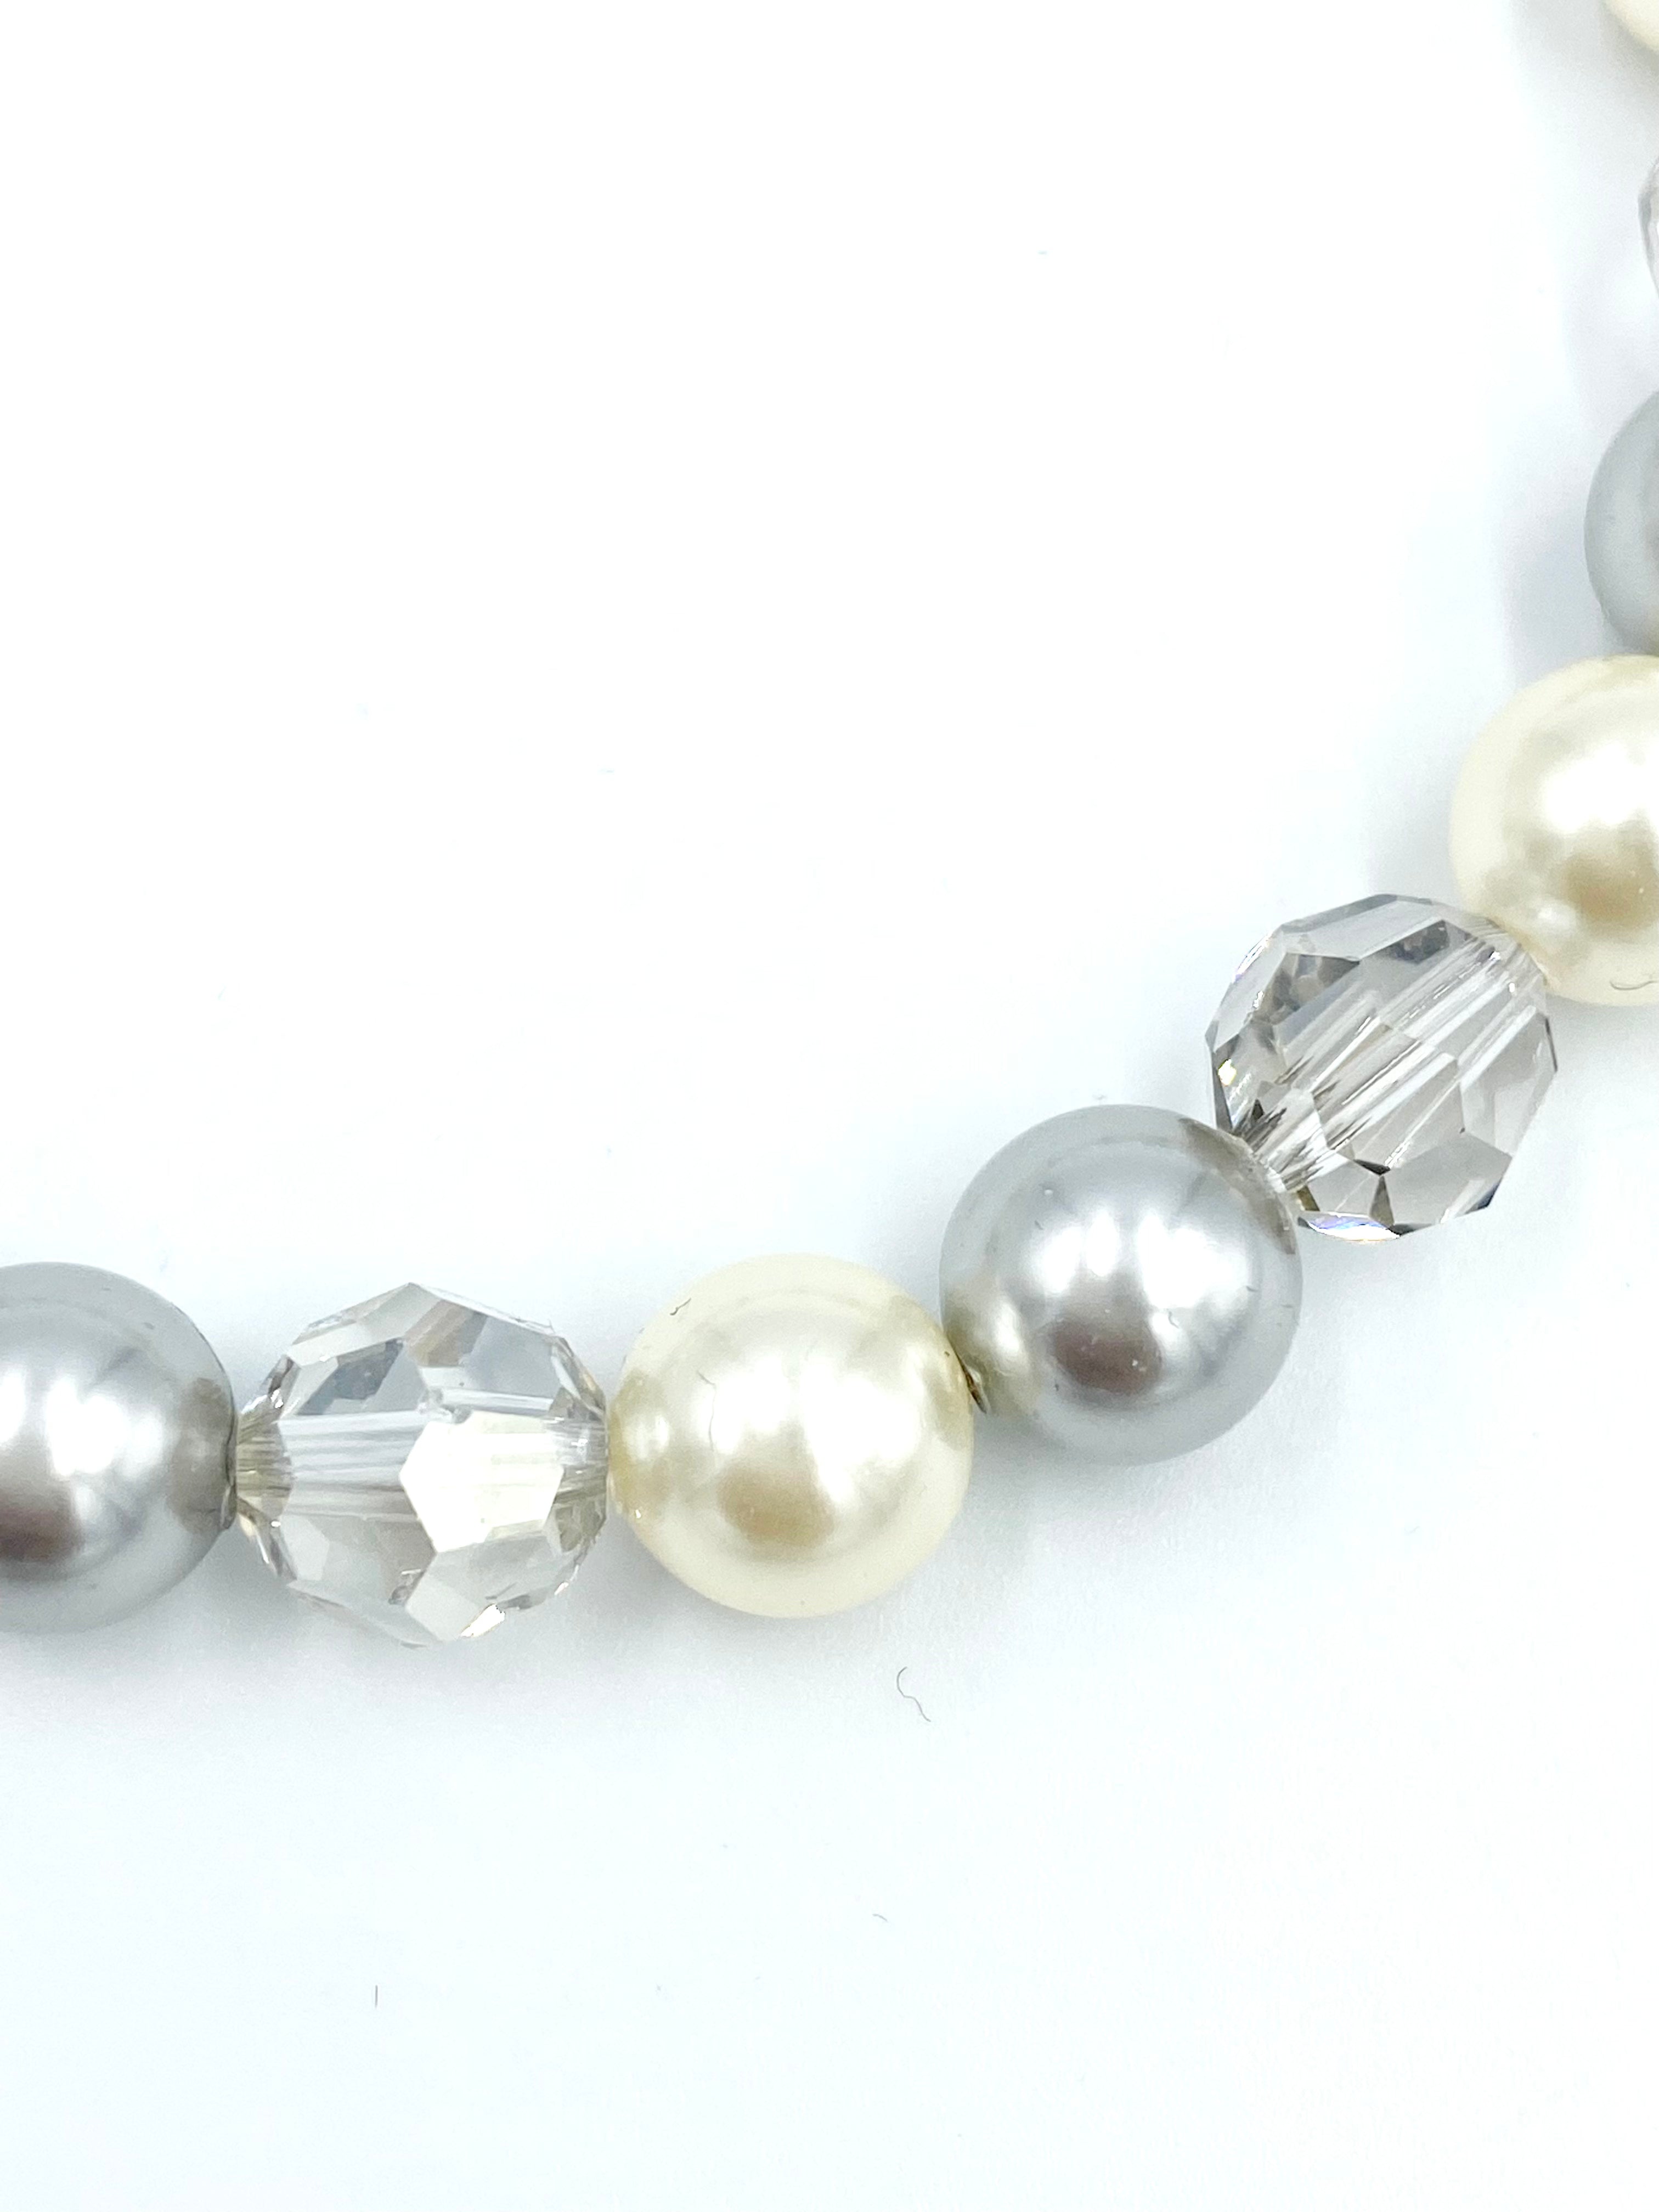 Joanna Bisley Light Grey, Cream Pearl Bracelet